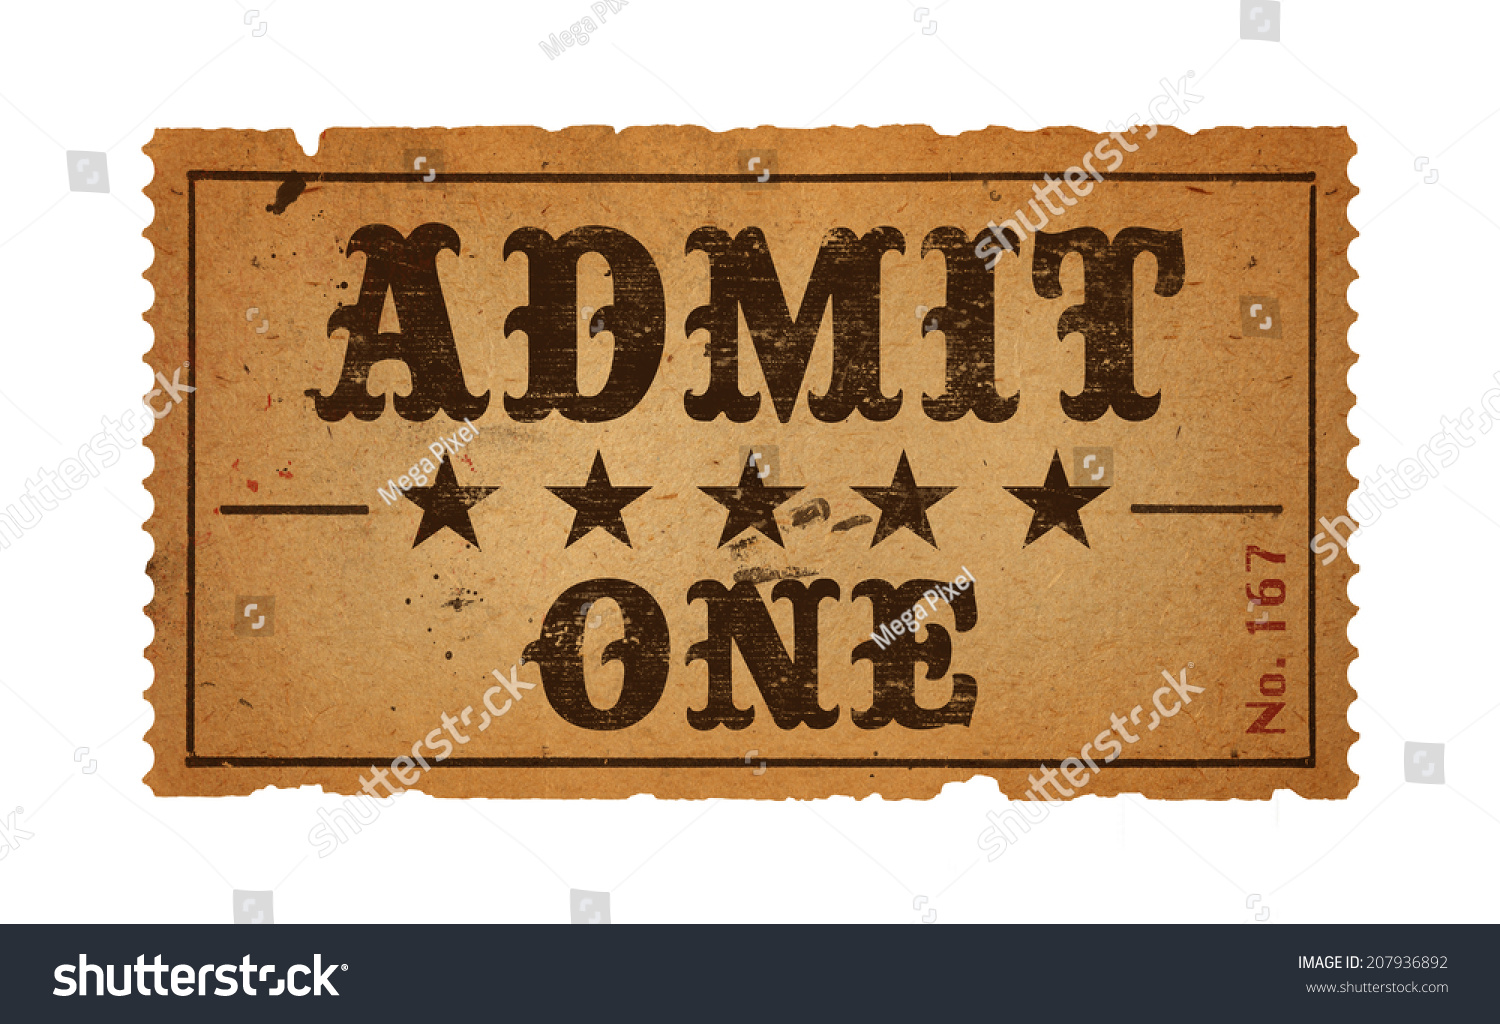 Wild West Admit One Movie Ticket Isolated on White Background. #207936892